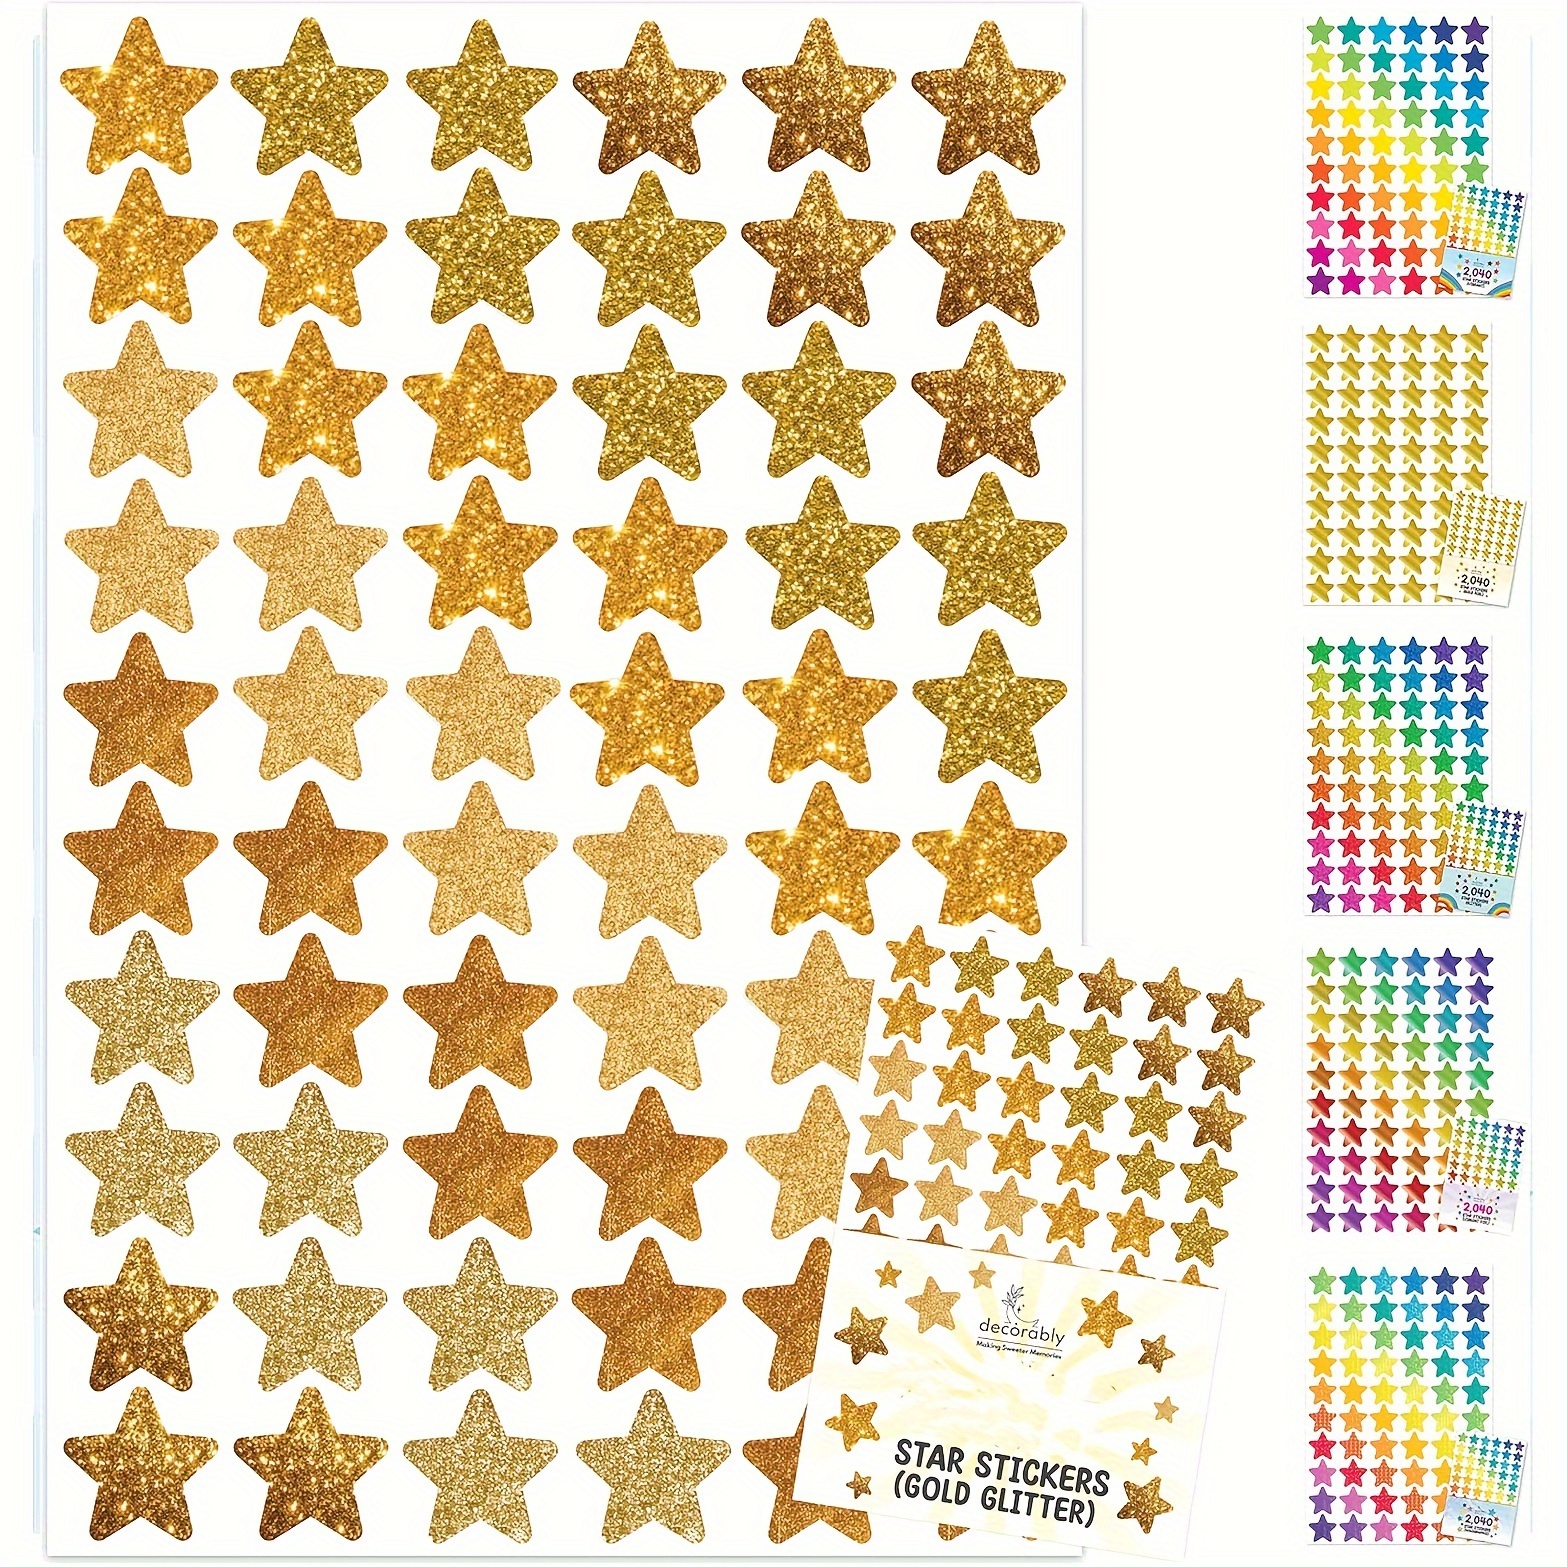 jojofuny 30 Sheets Star Stickers Small Teacher Stickers for Students Kids  Reward Stickers Gold Stars Stickers Kids Stickers Glitter Reward Sticker